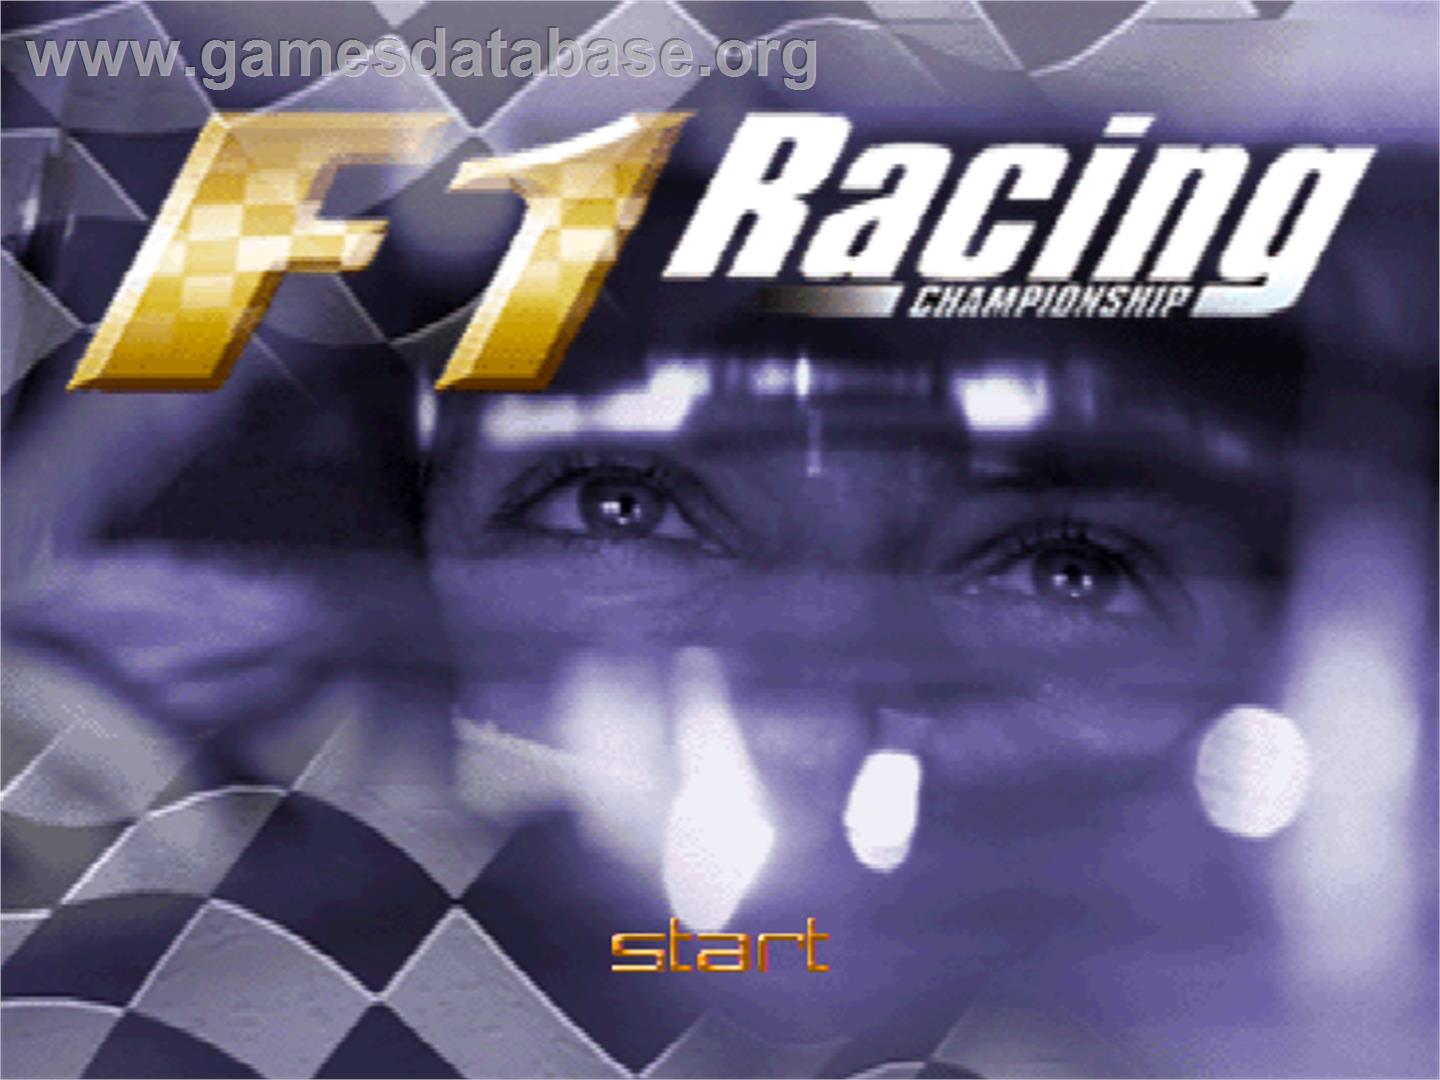 F1 Racing Championship - Nintendo N64 - Artwork - Title Screen